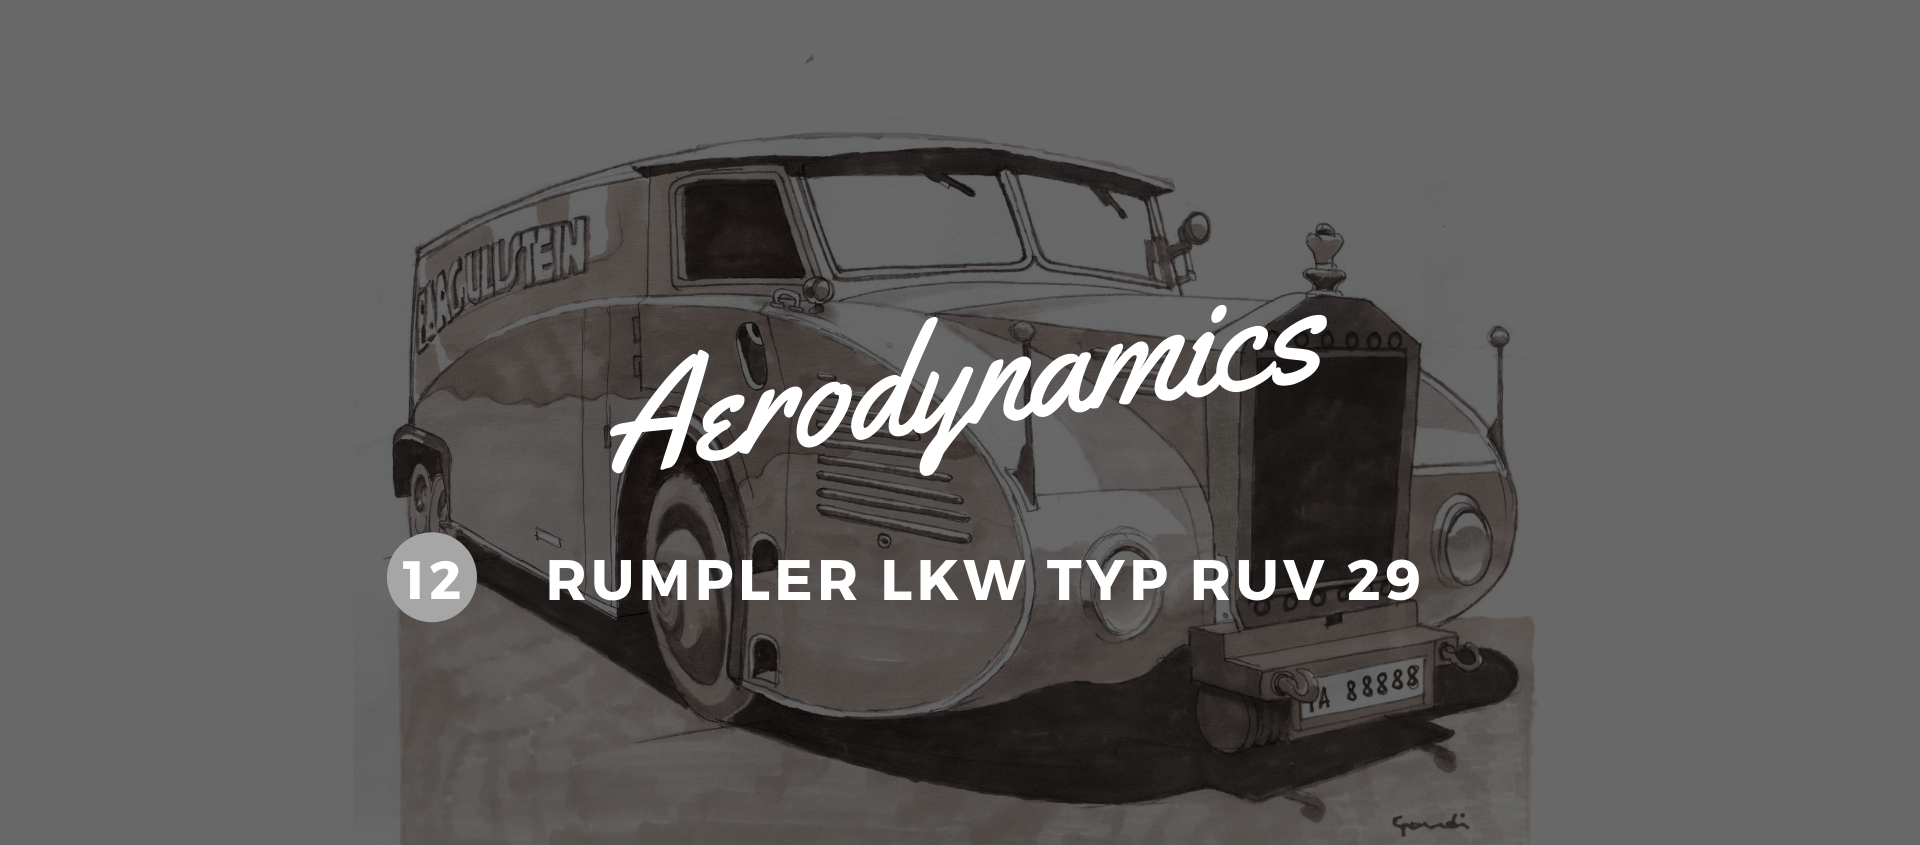 Rumpler LKW typ RuV29. Delivering news hot off the press image